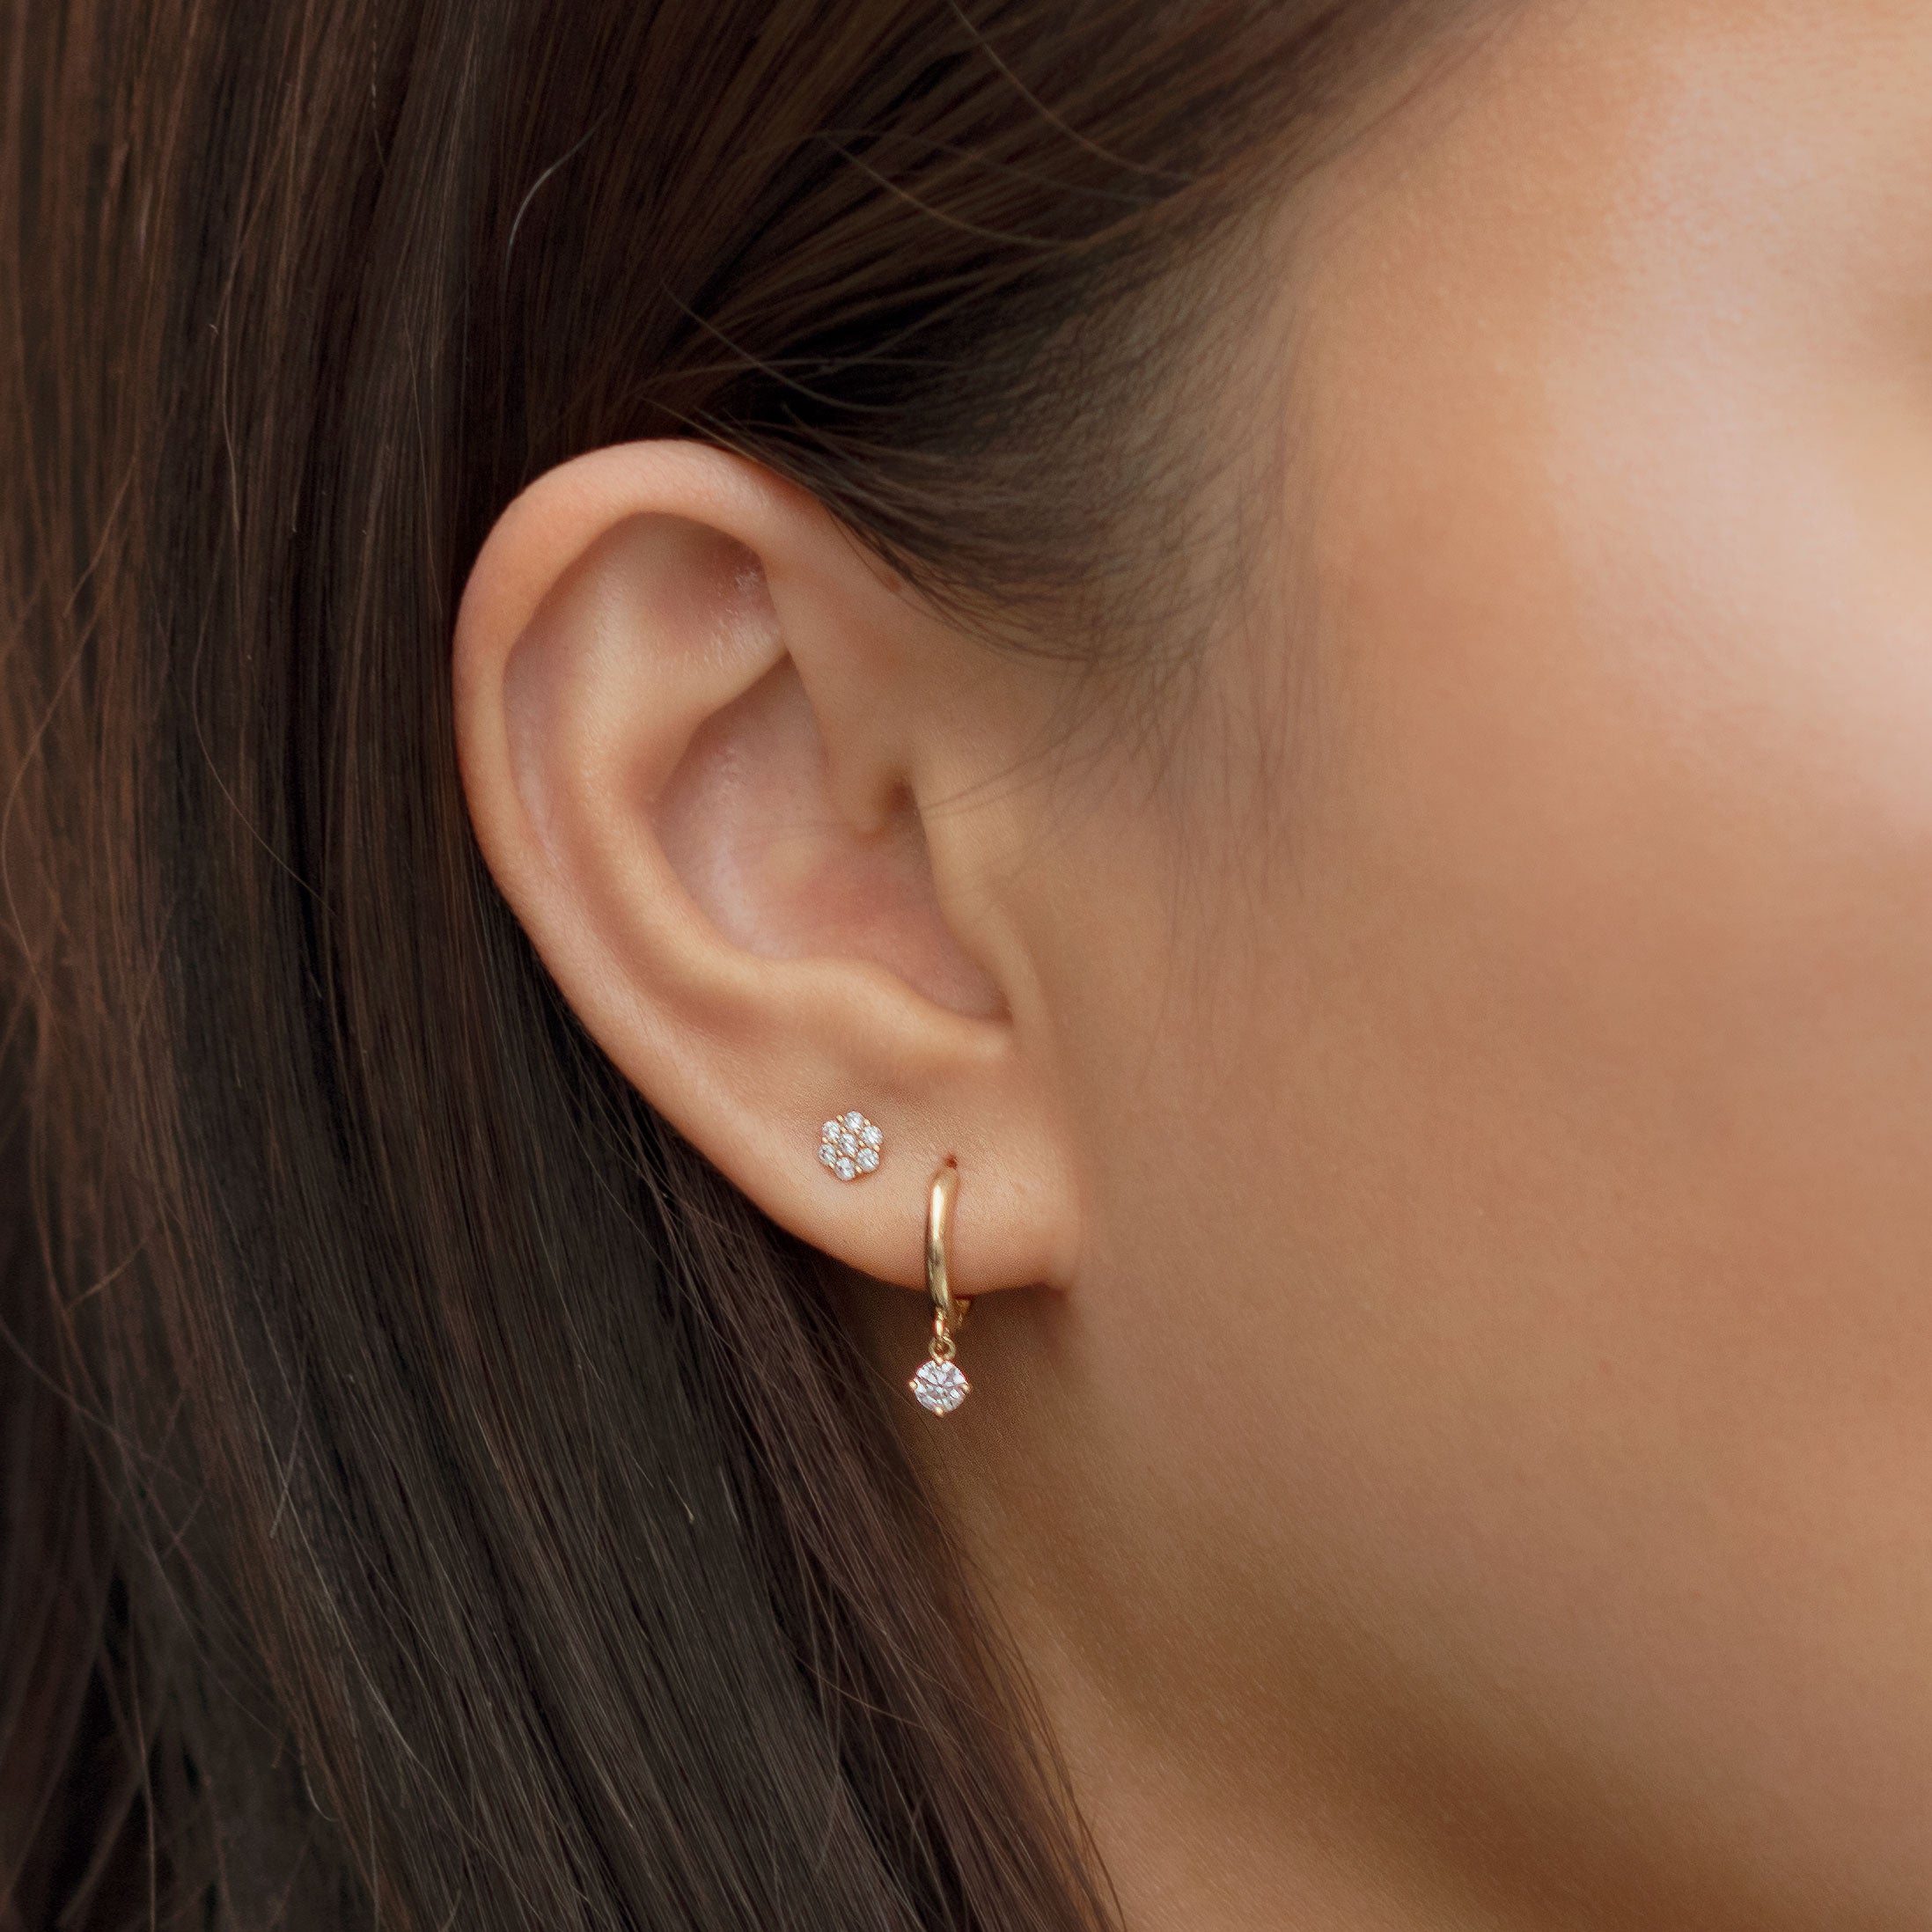 14K Gold Dangle Crystal Huggie Earrings with stud earring